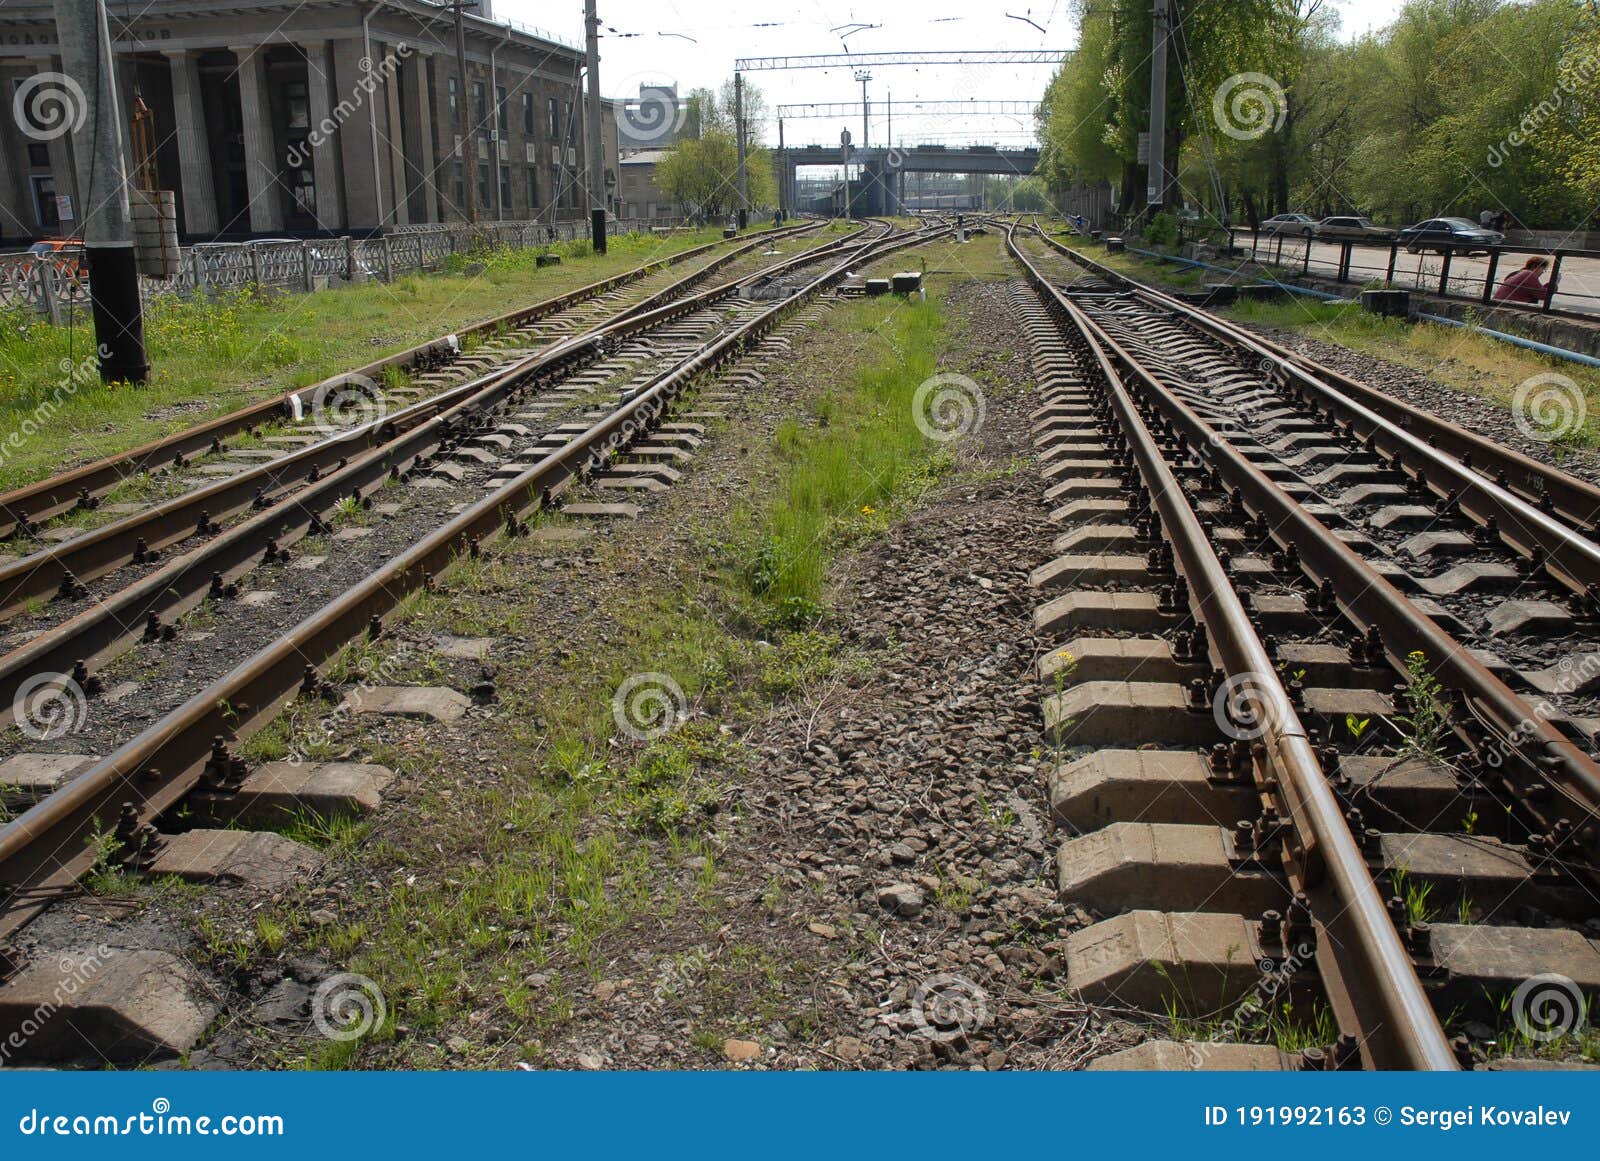 railway in the city of lugansk, lpr.